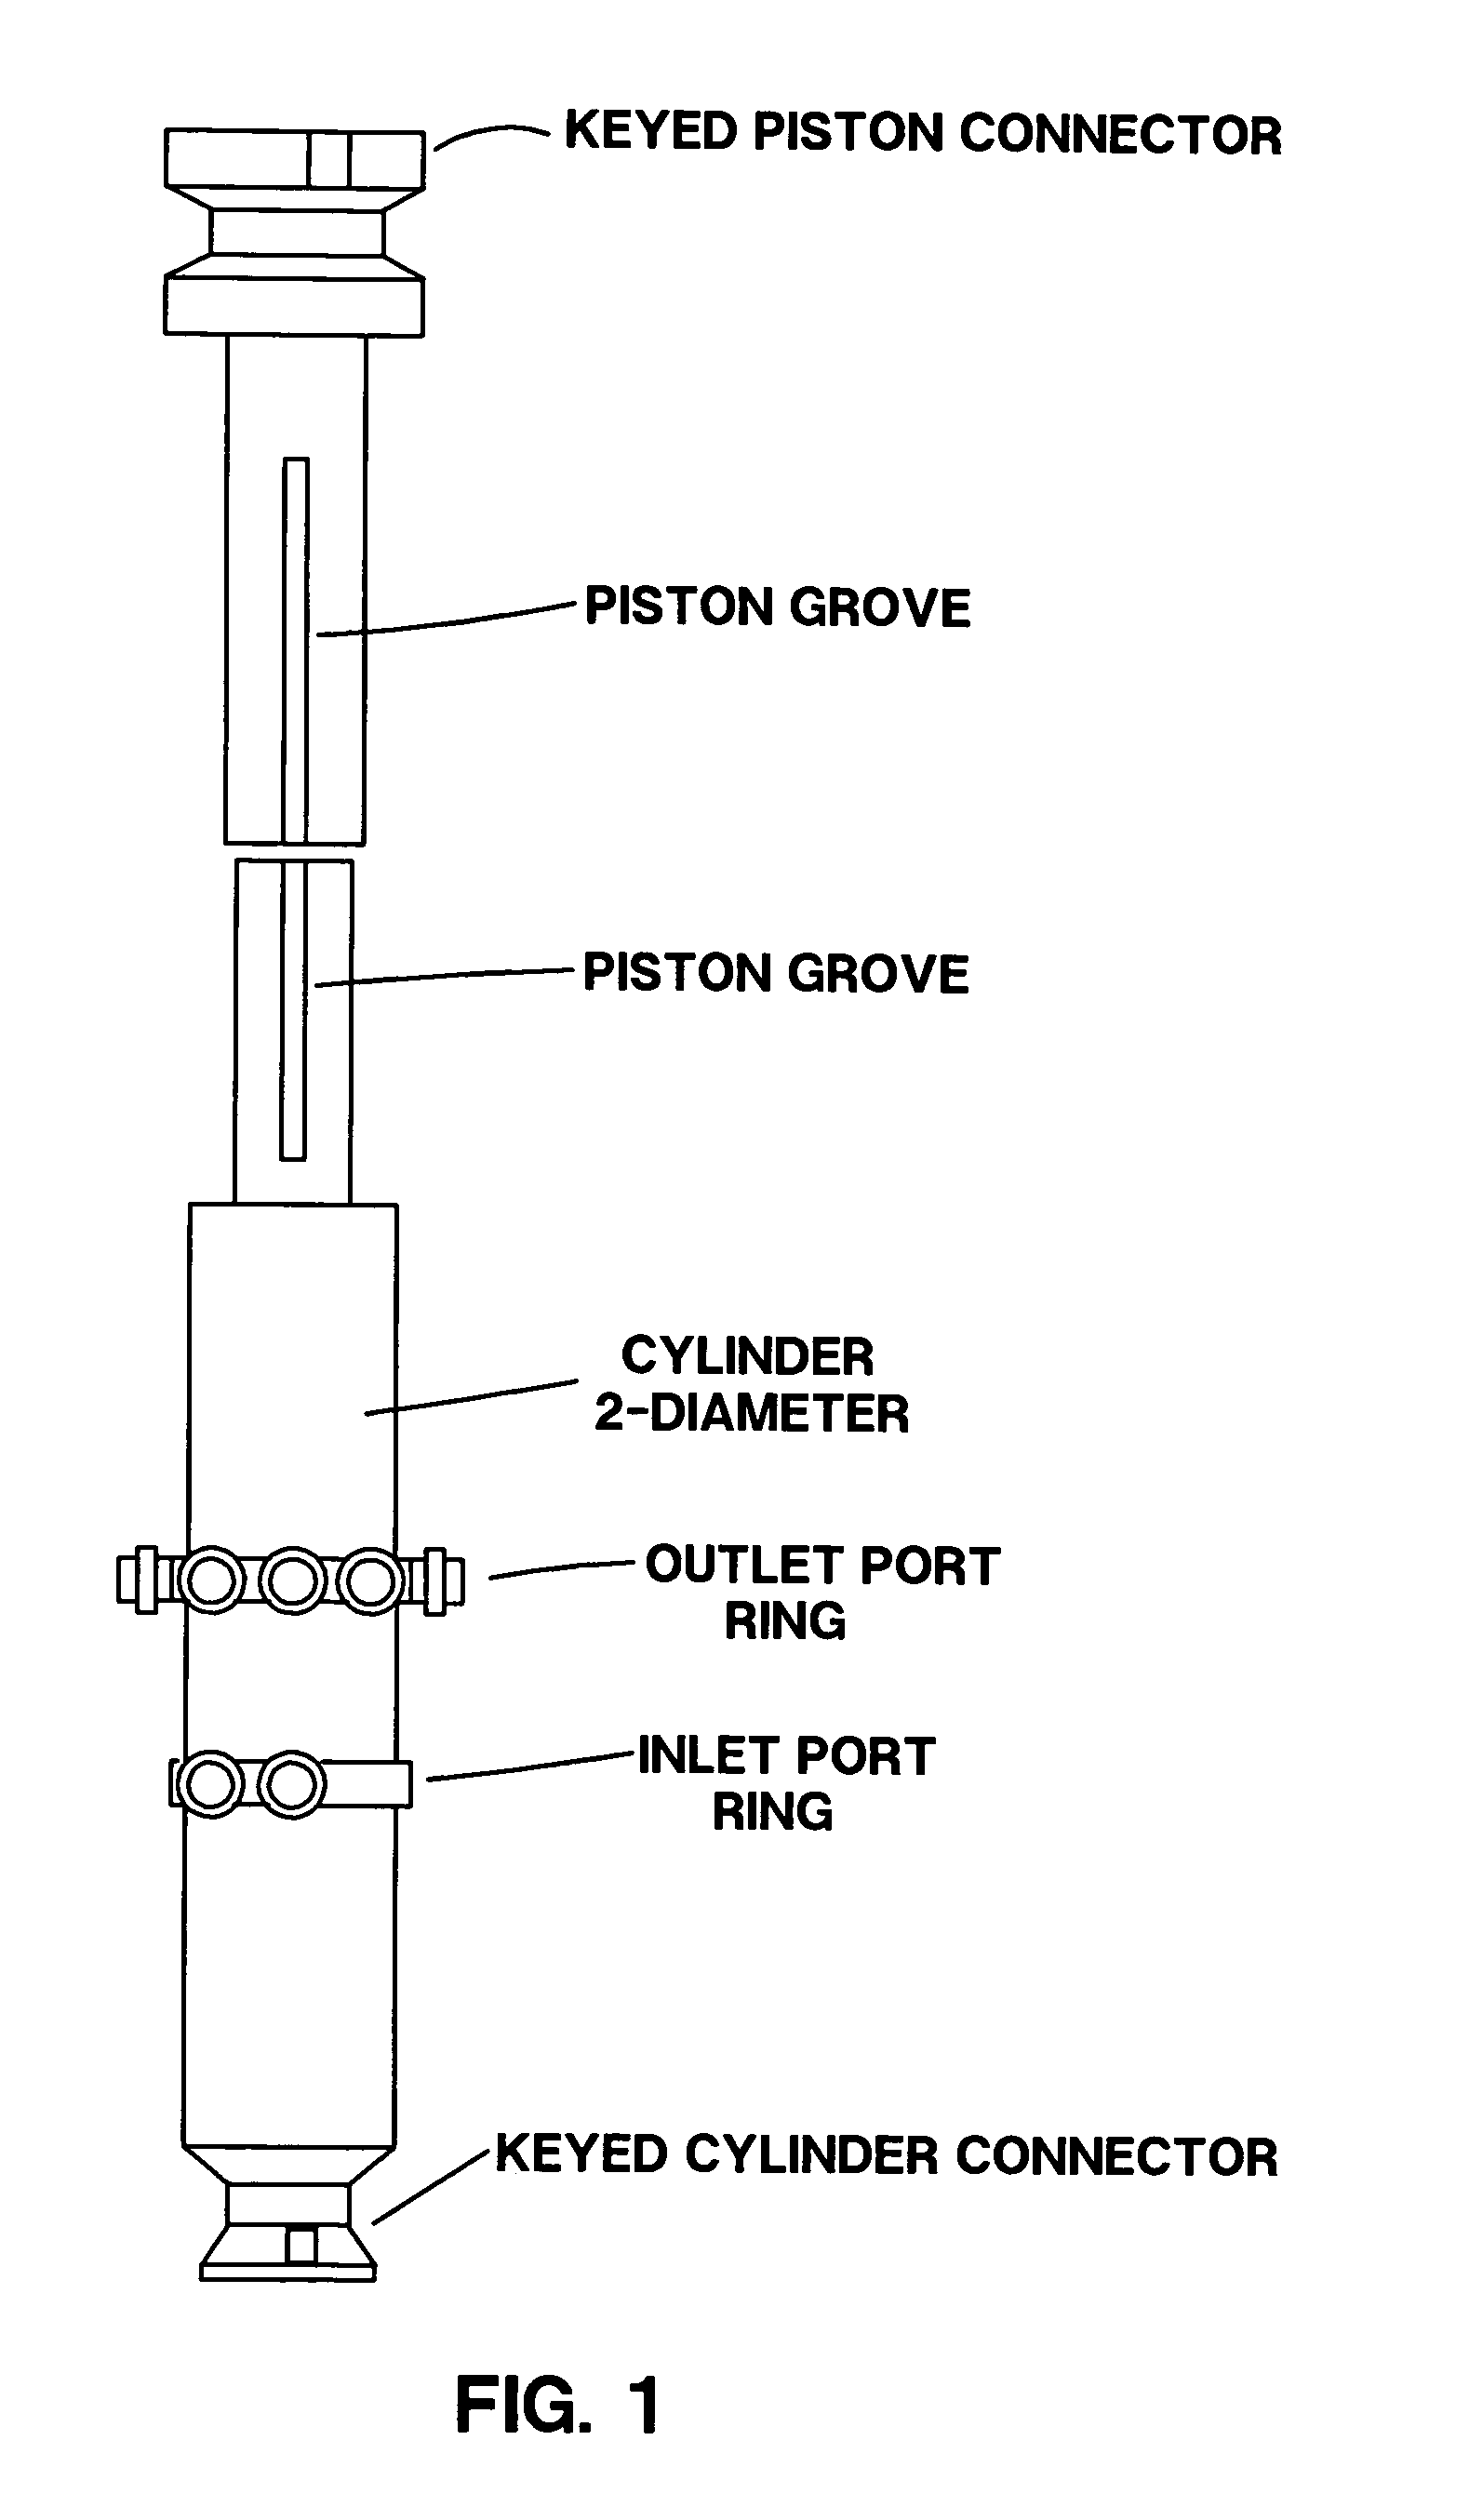 Multiple port dual diameter pumps